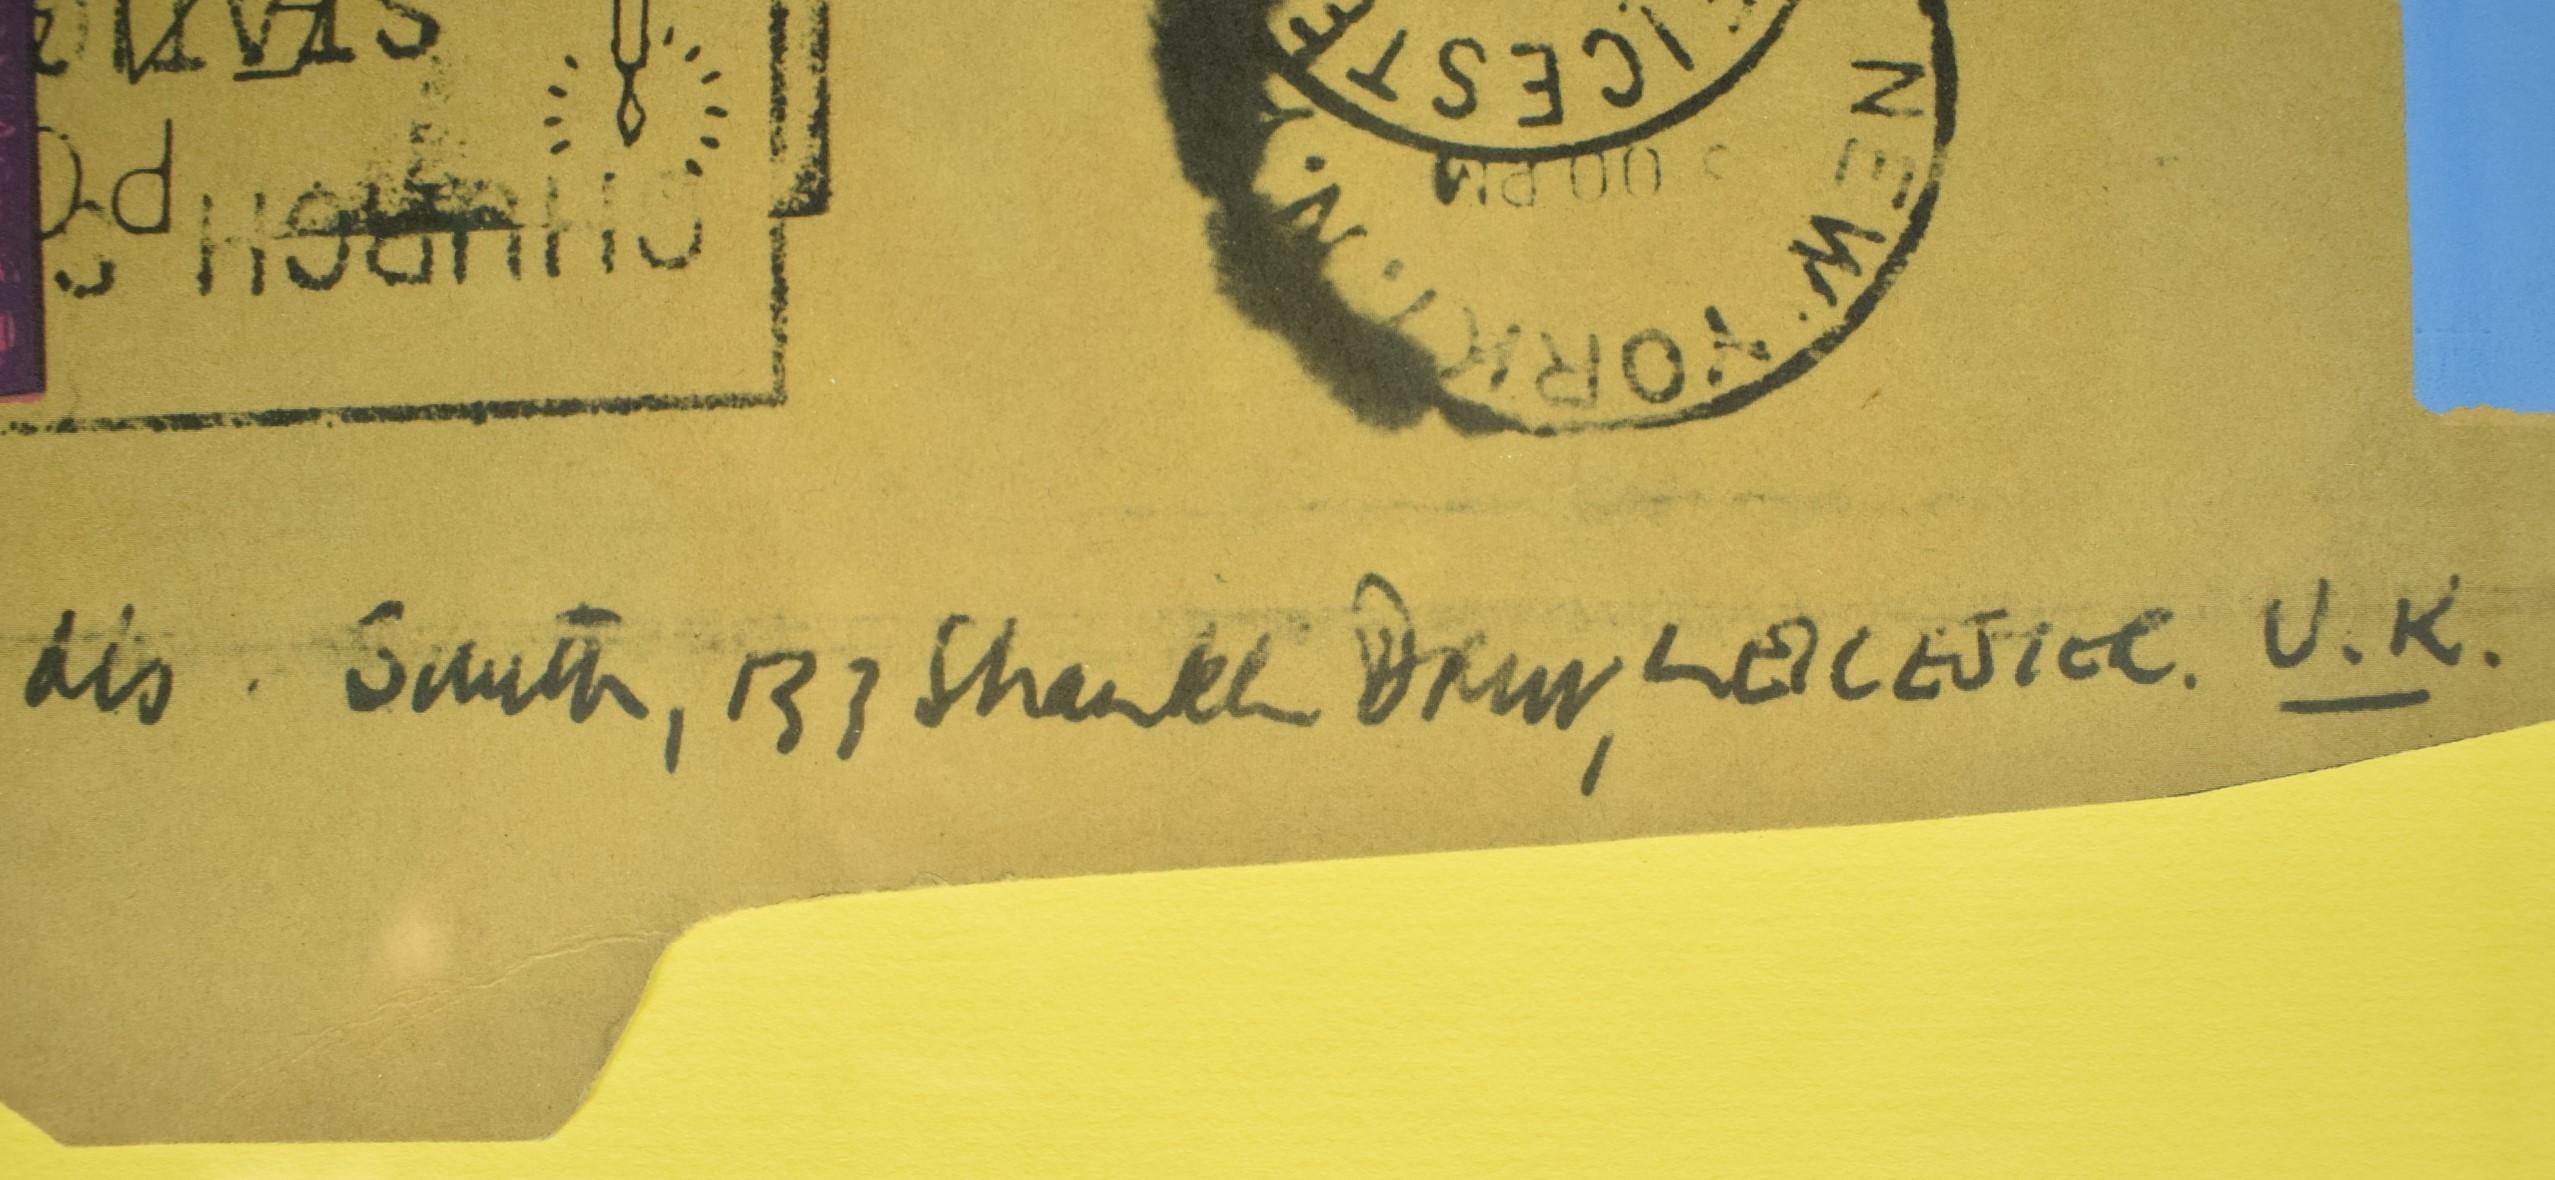 Peter Gee c1963 Postmarked Envelope For Sale 2